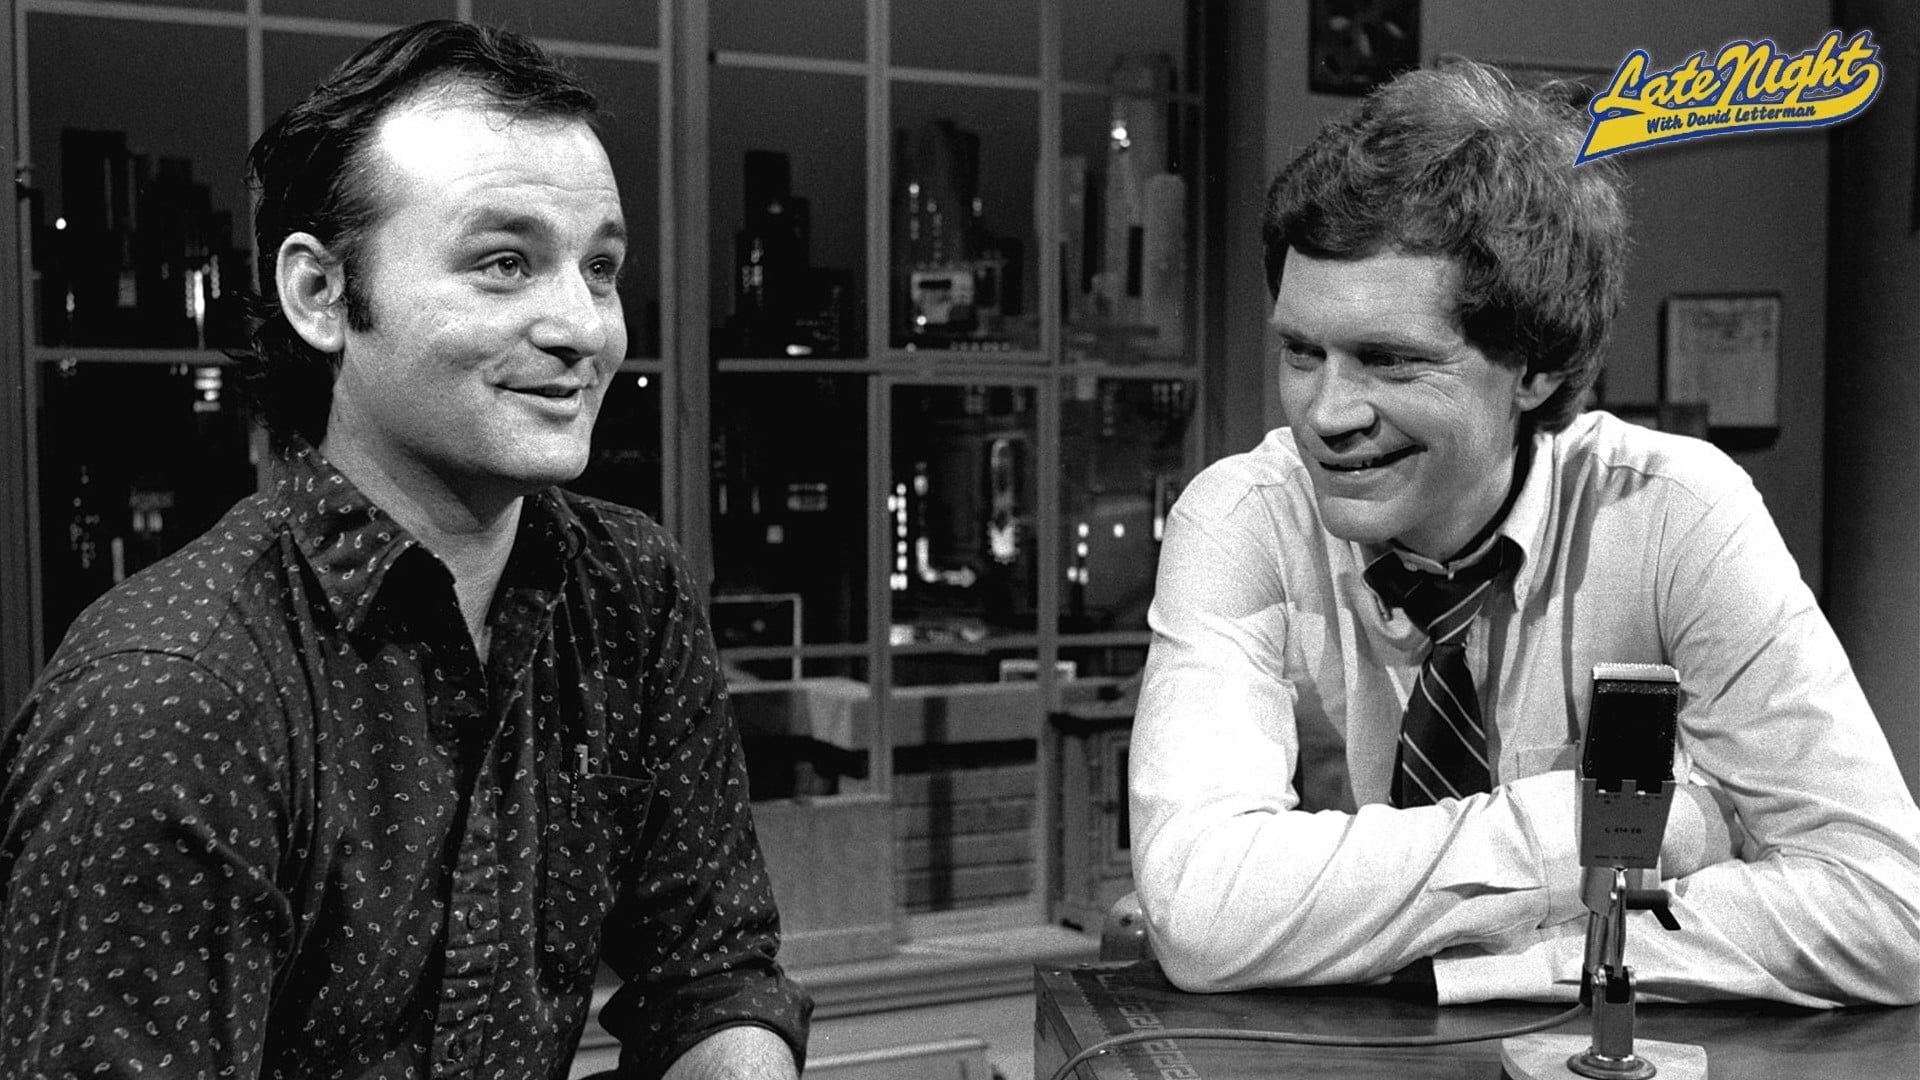 Late Night with David Letterman - Staffel 8 Folge 53 (1970)